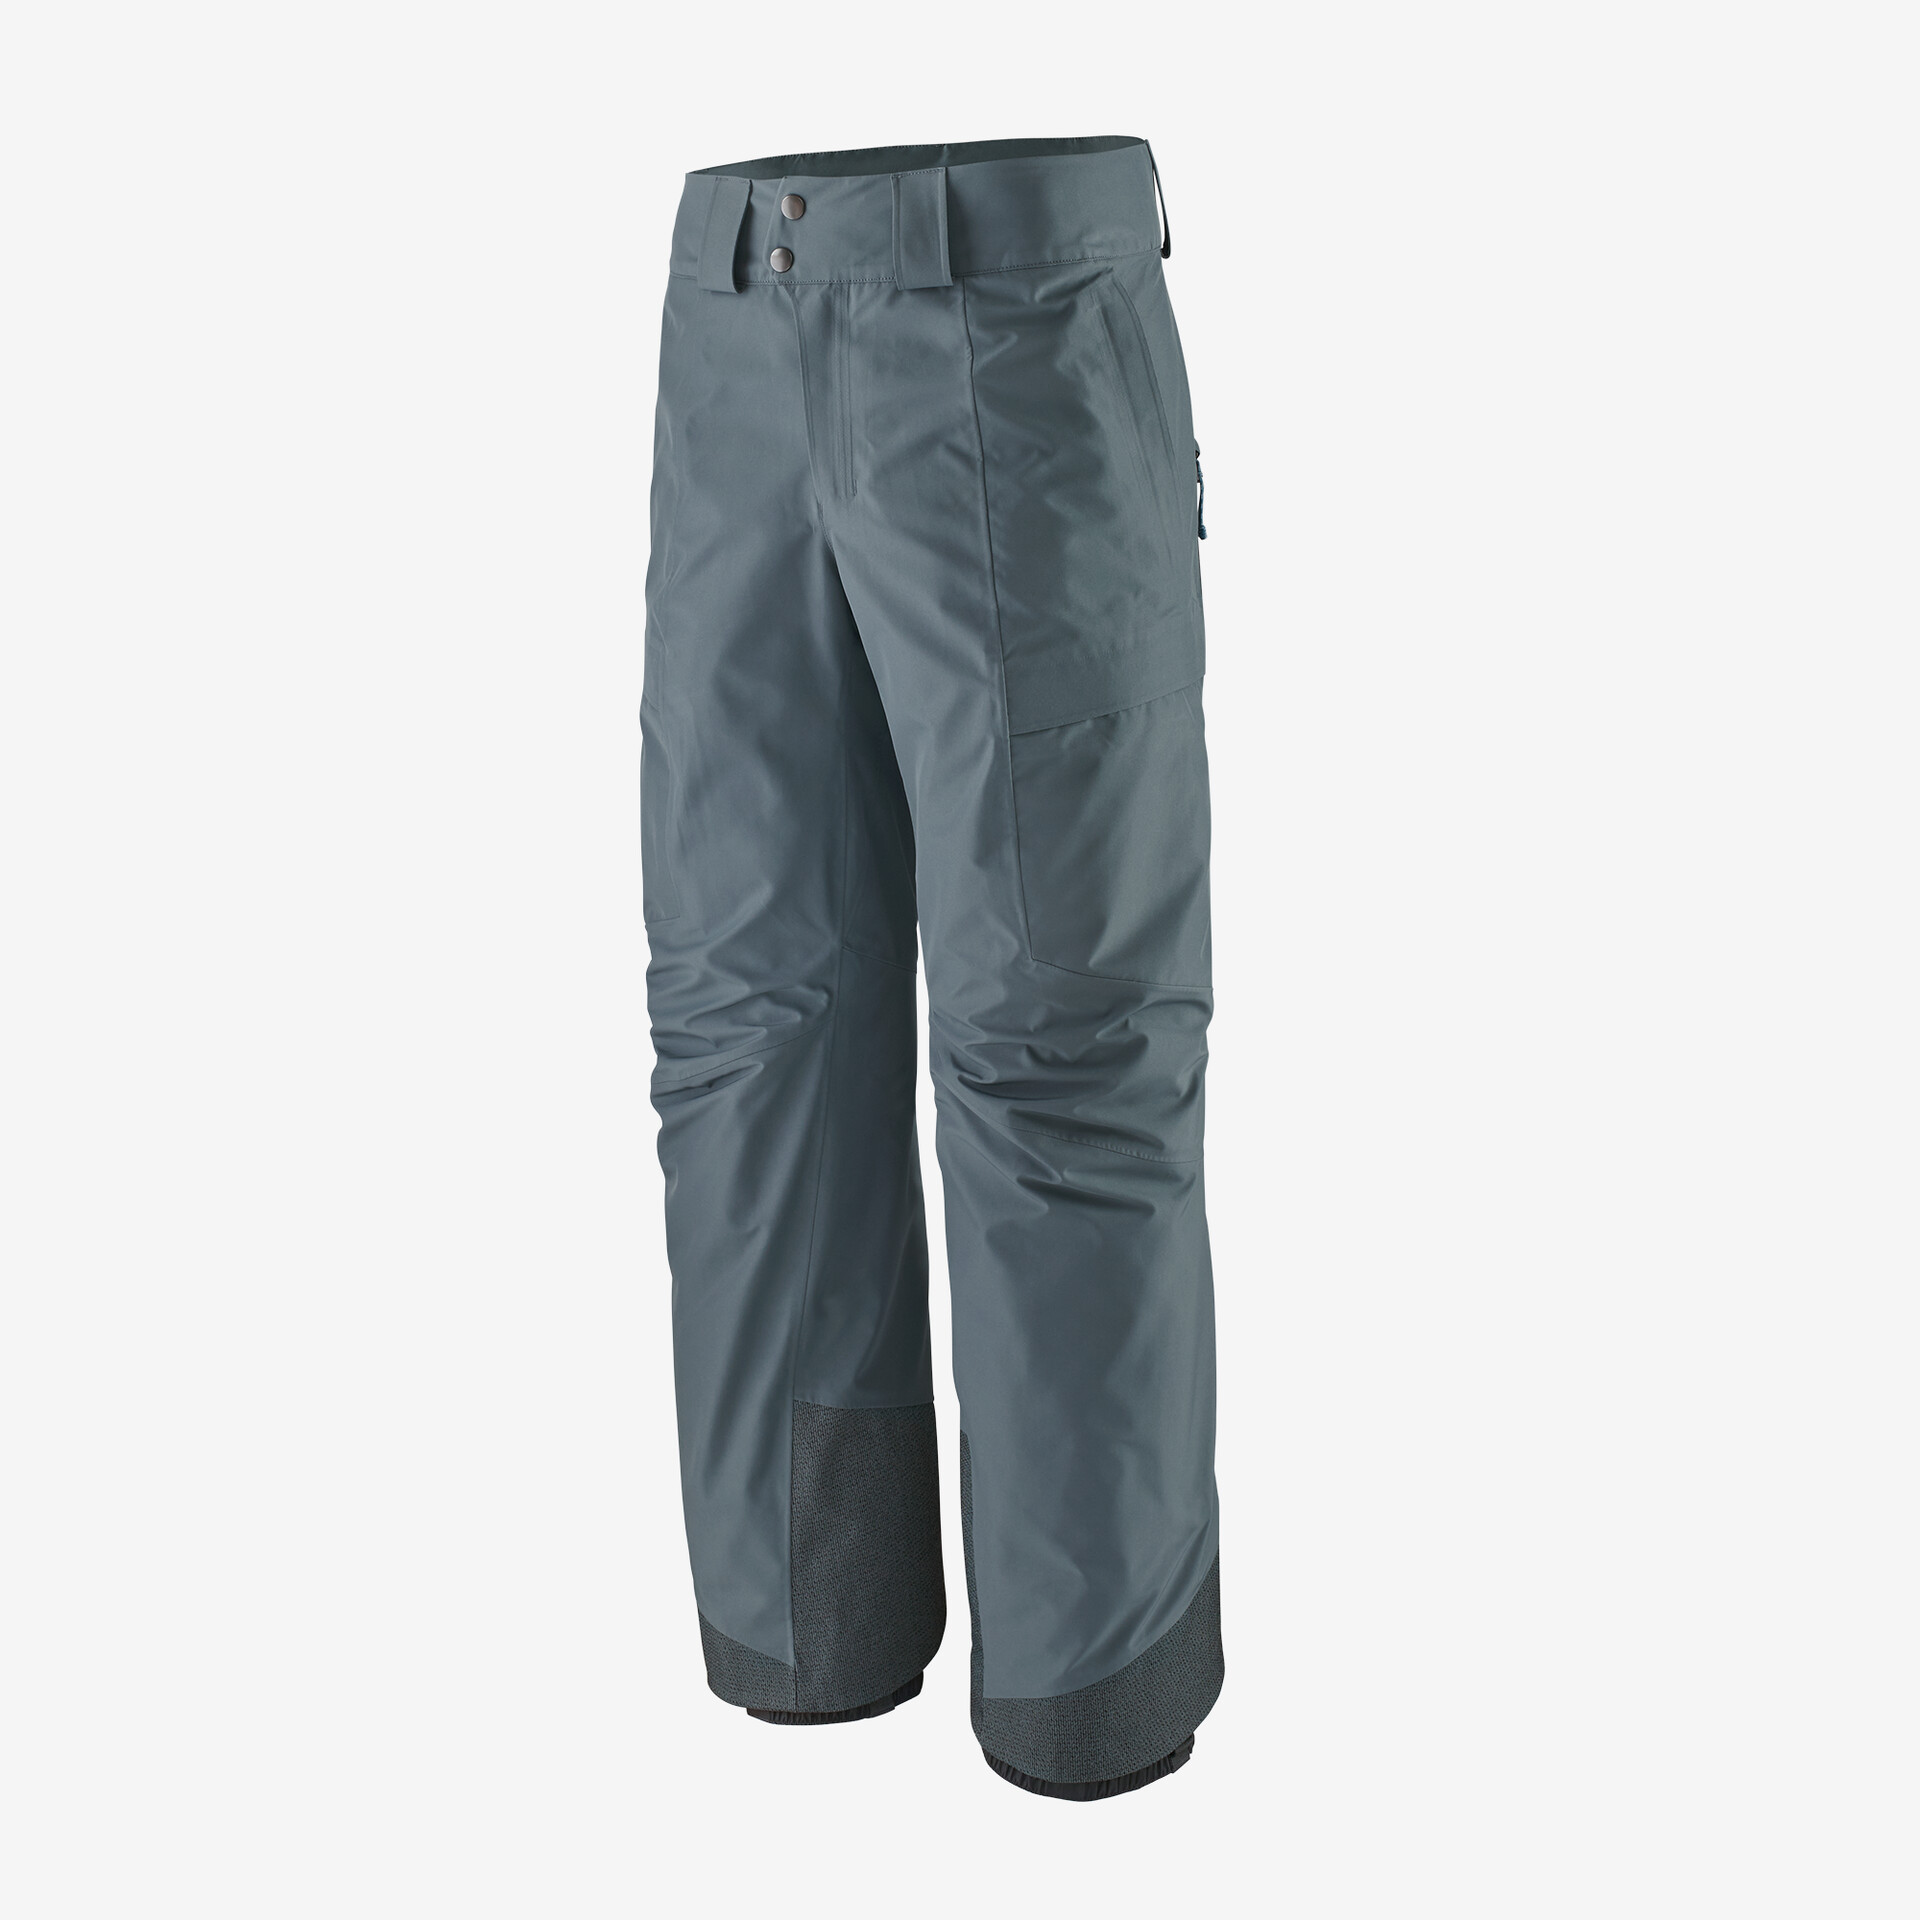 Мужские брюки Storm Shift Patagonia, серый мужские брюки storm shift patagonia зеленый